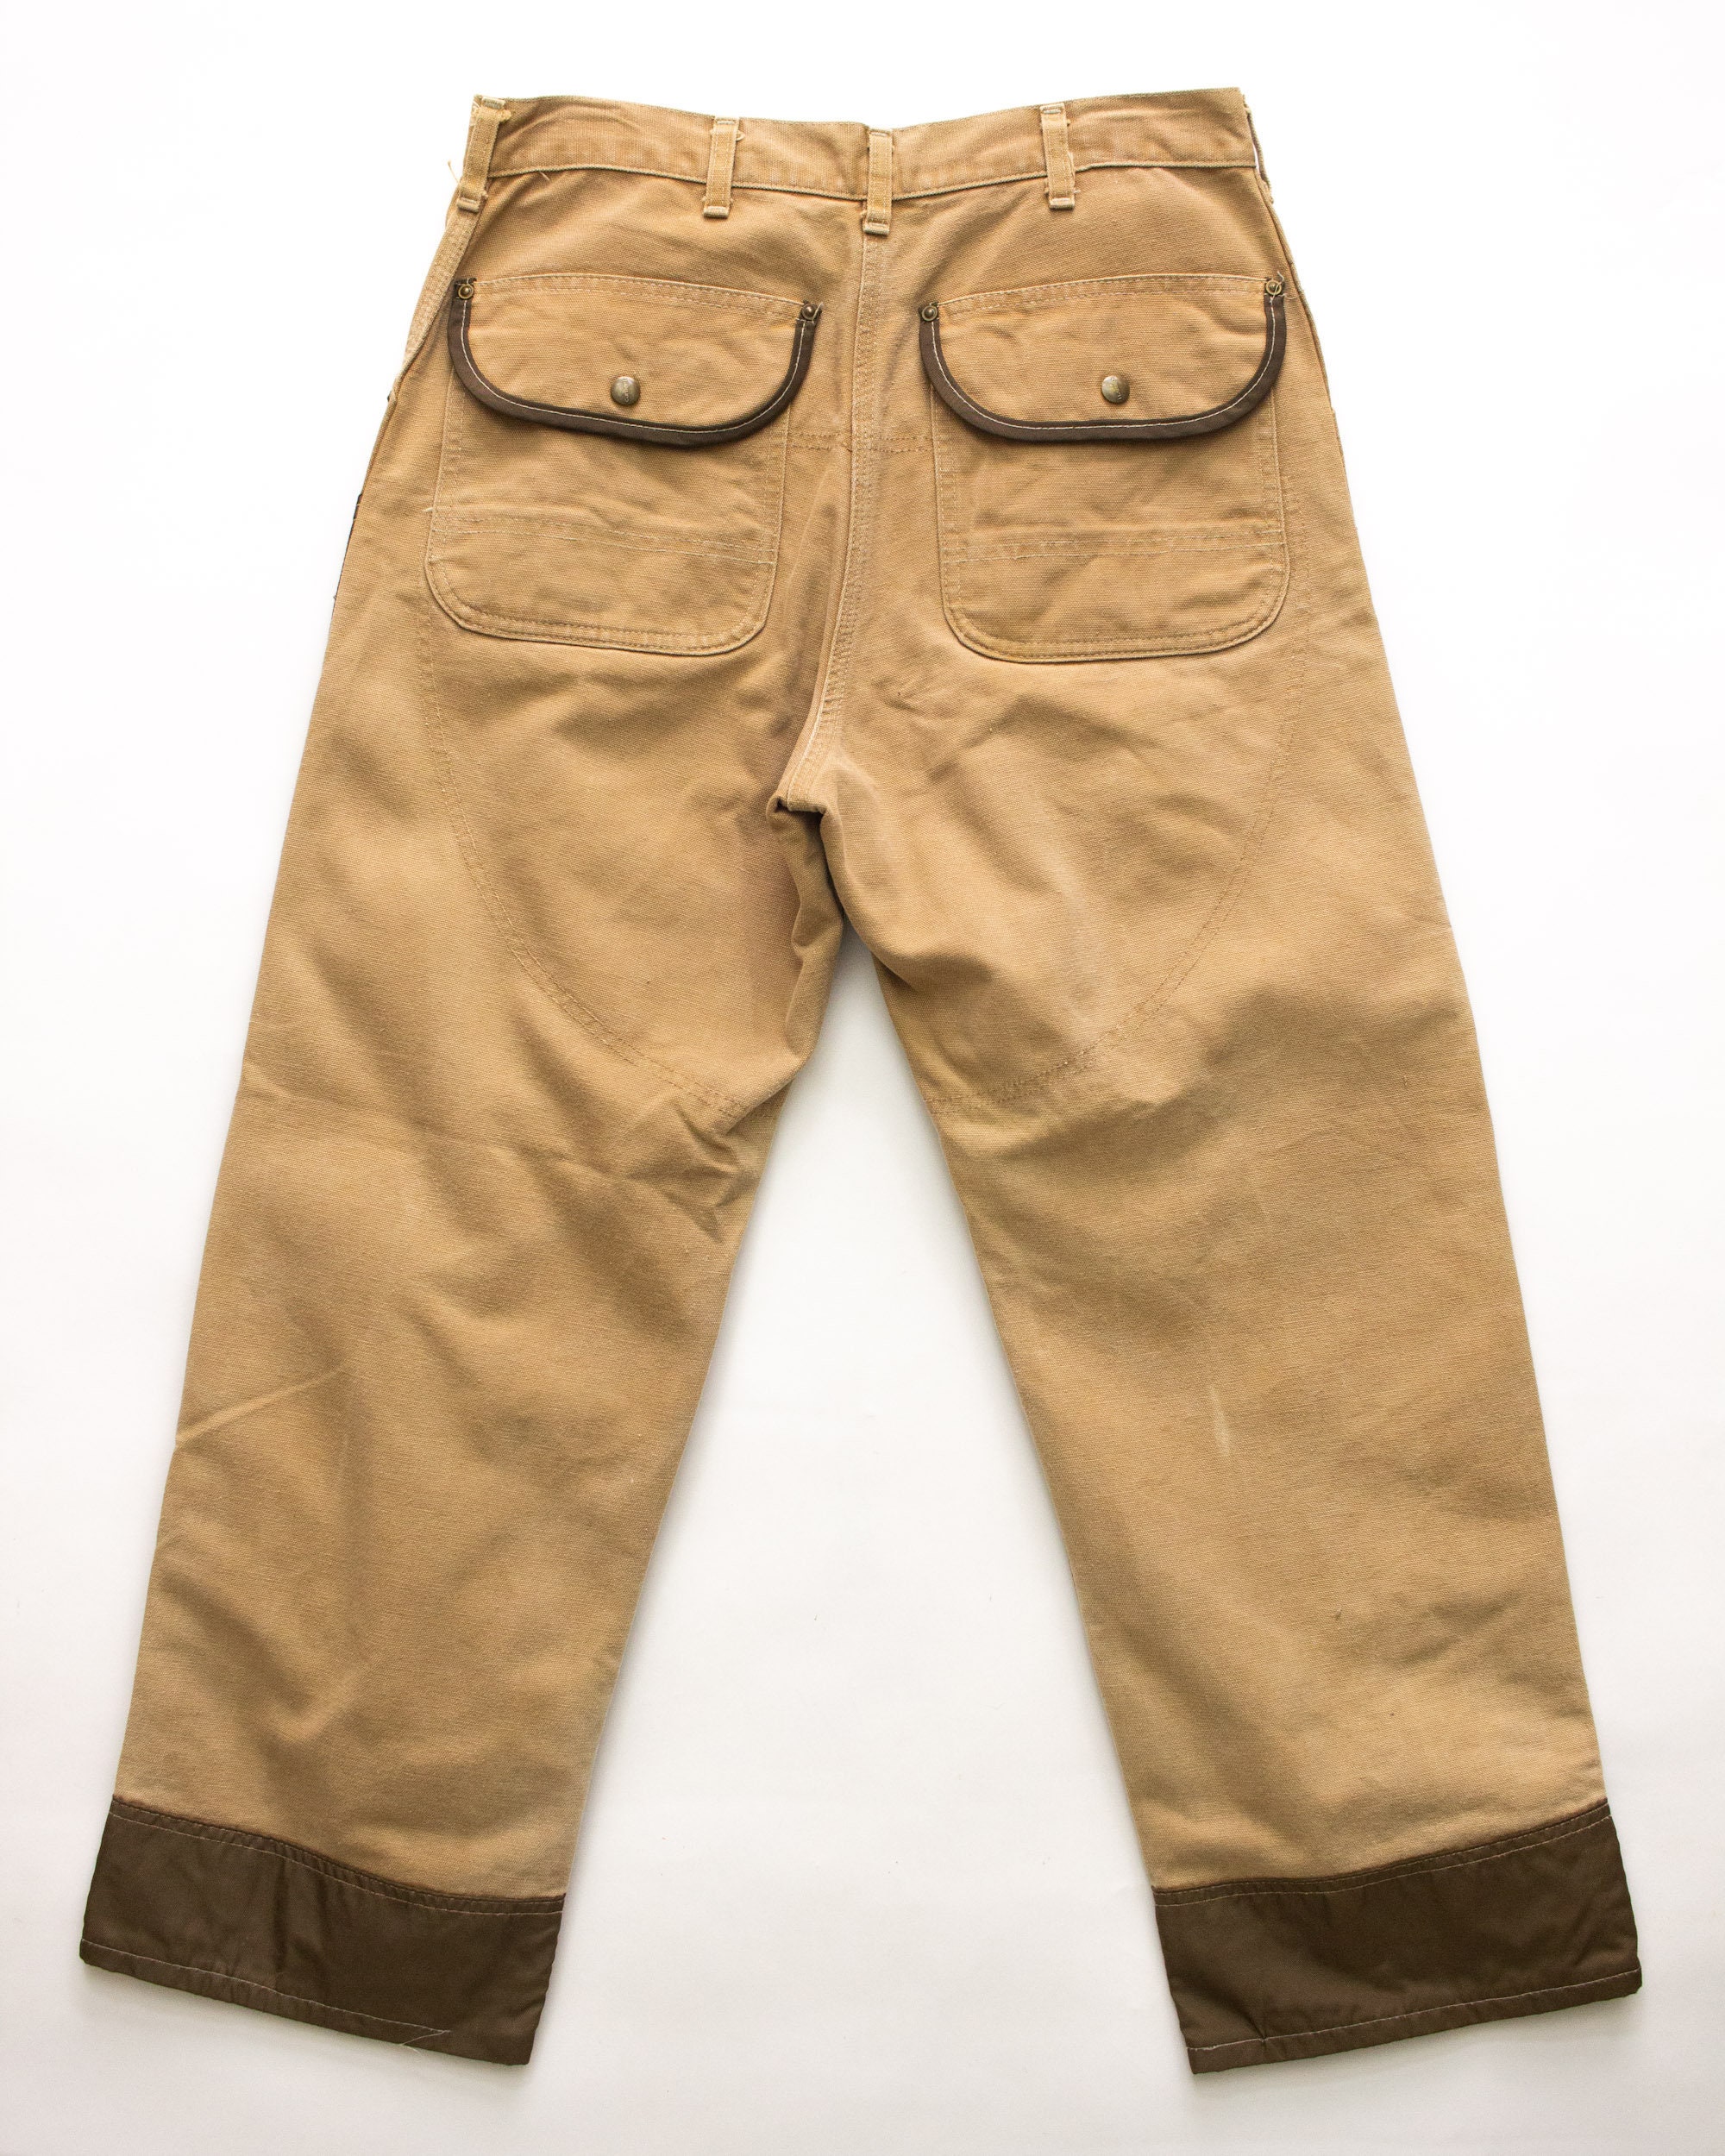 Carhartt Nylon Faced Hunting Pants Vintage 80s Carhartt - Etsy Singapore